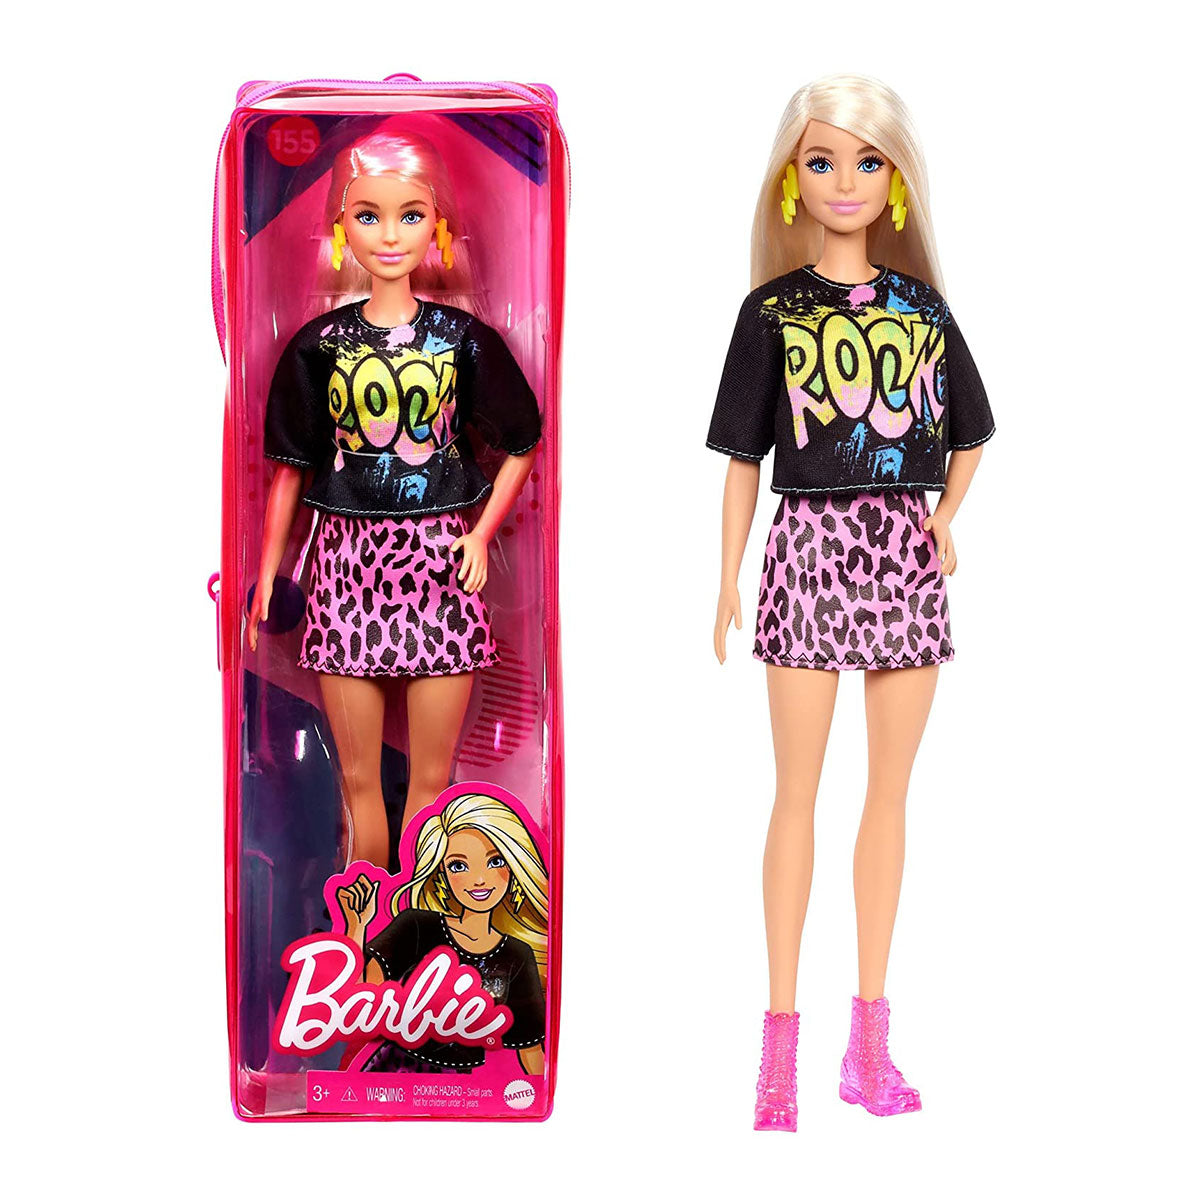 Barbie - Fashionistas Rock Skirt Doll